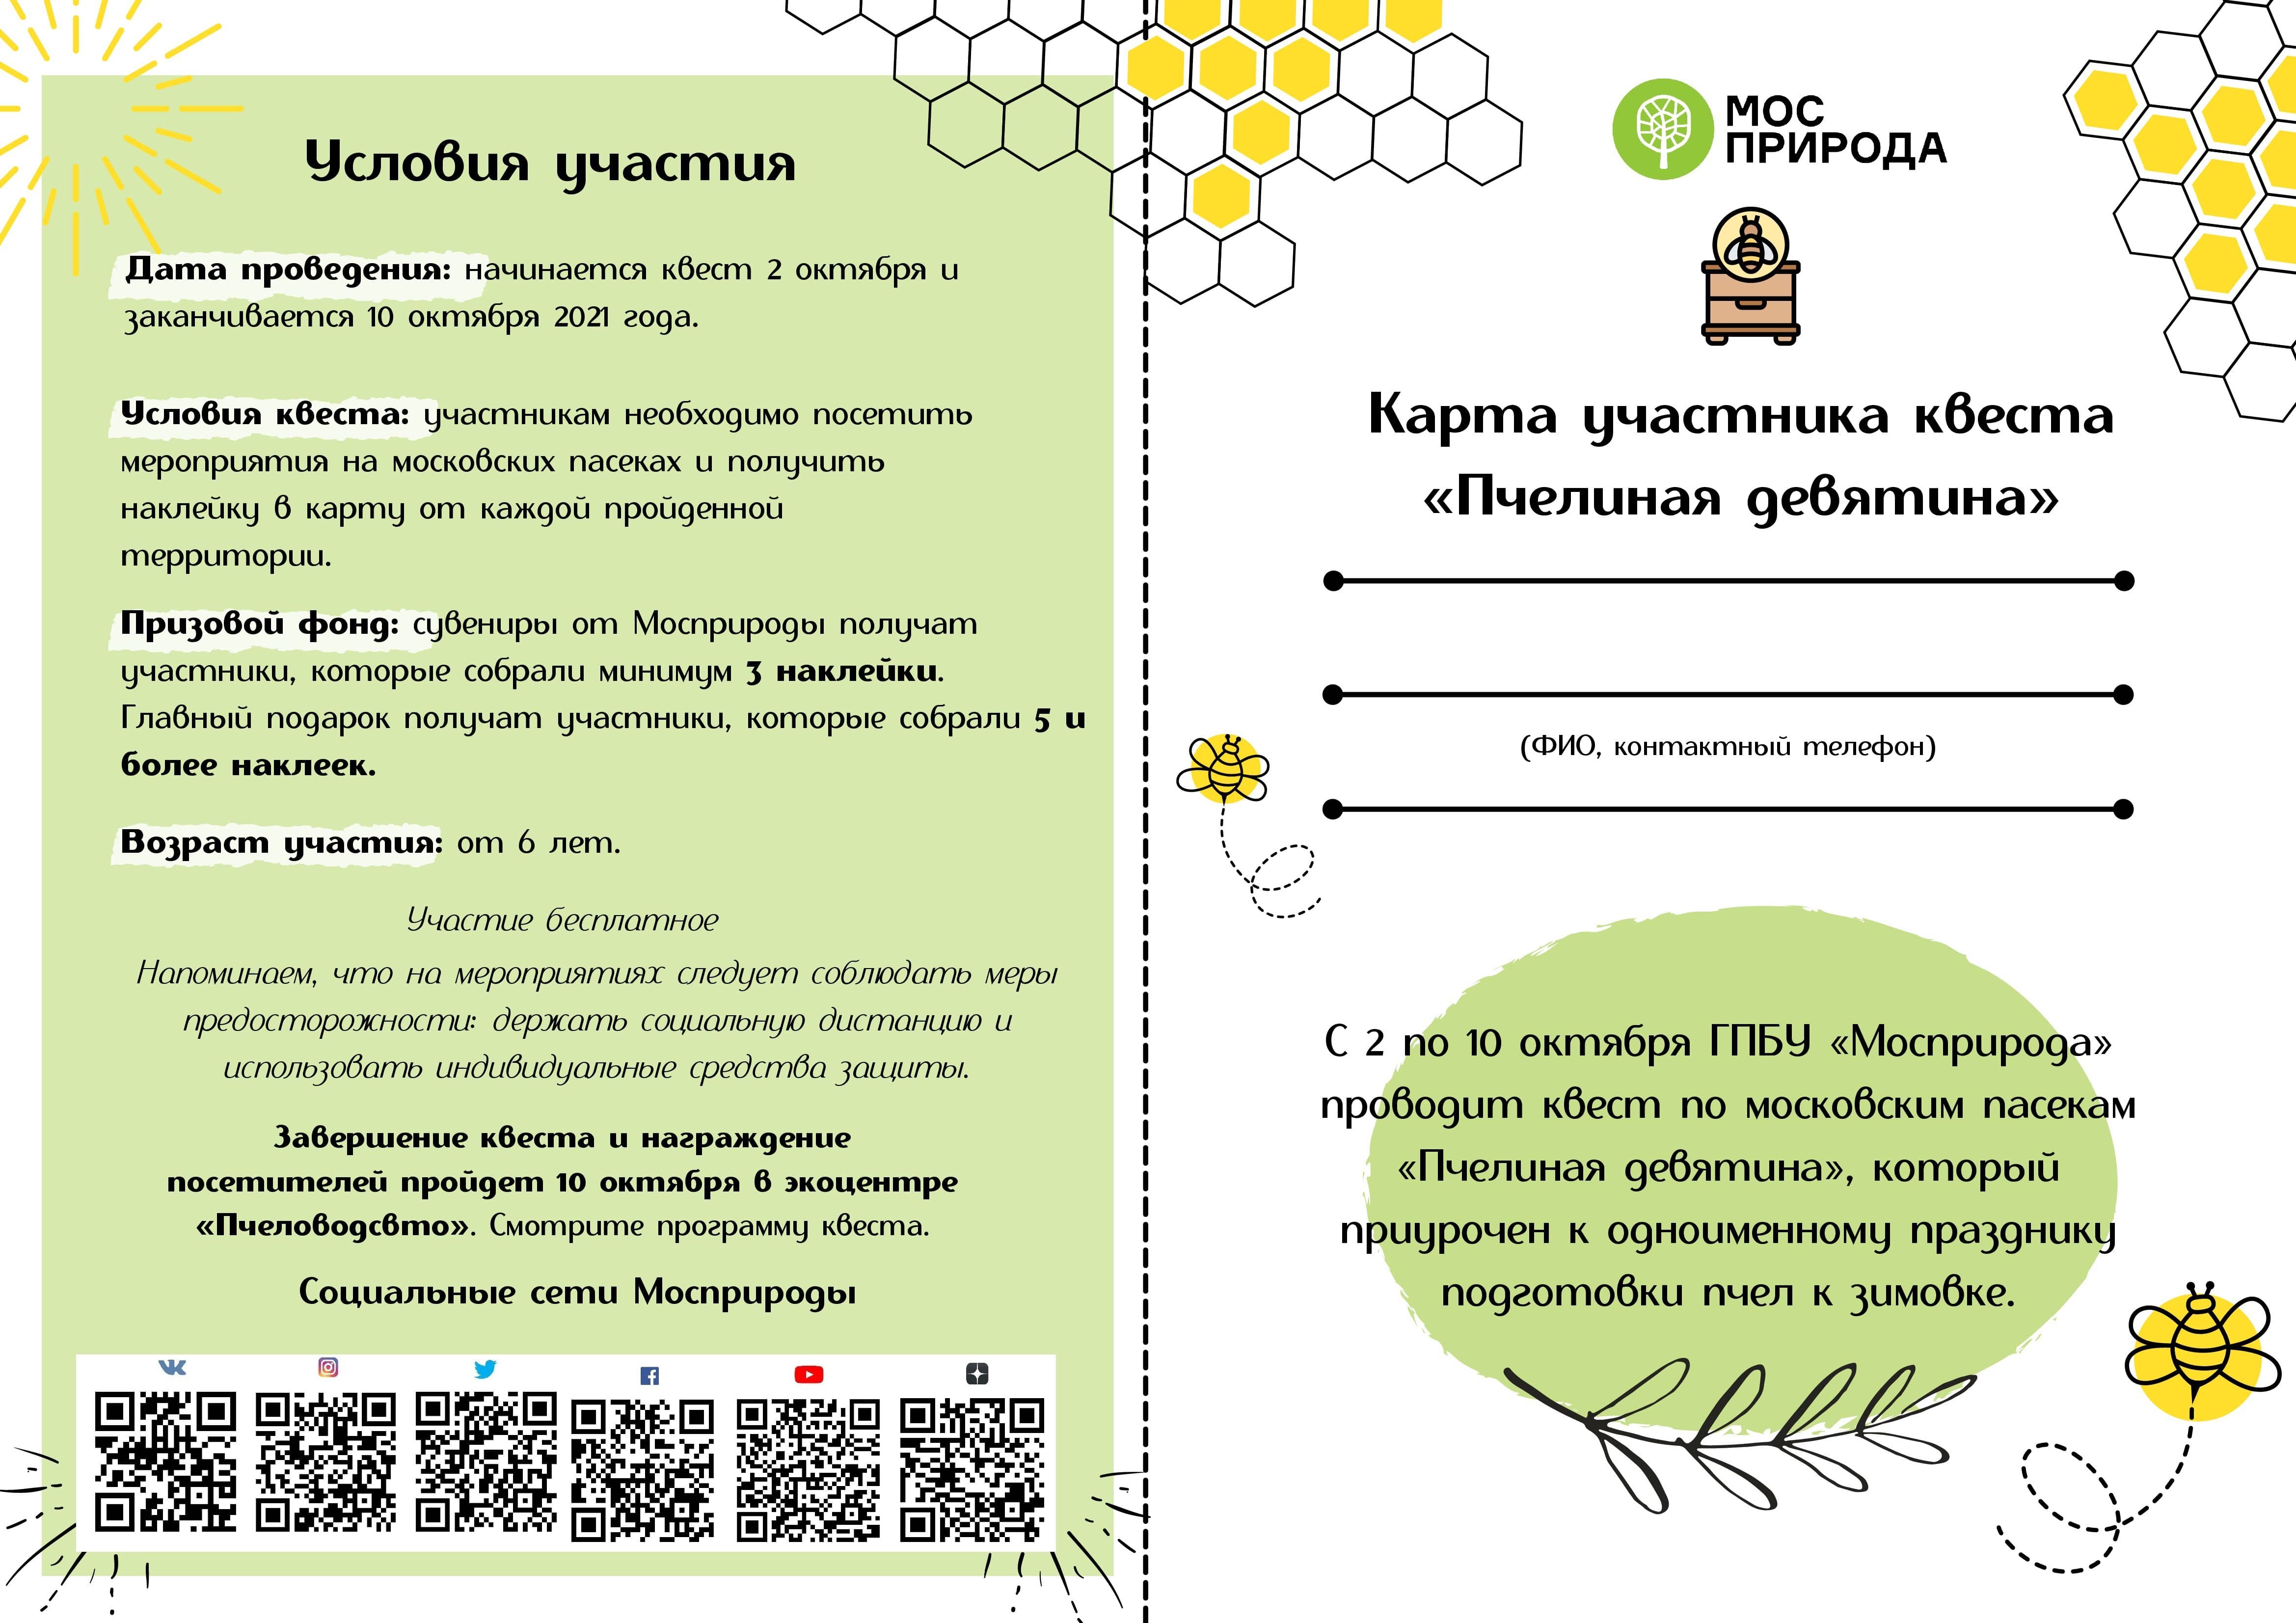 Пчелиная девятина: Мосприрода подготовила квест по московским пасекам - фото 2